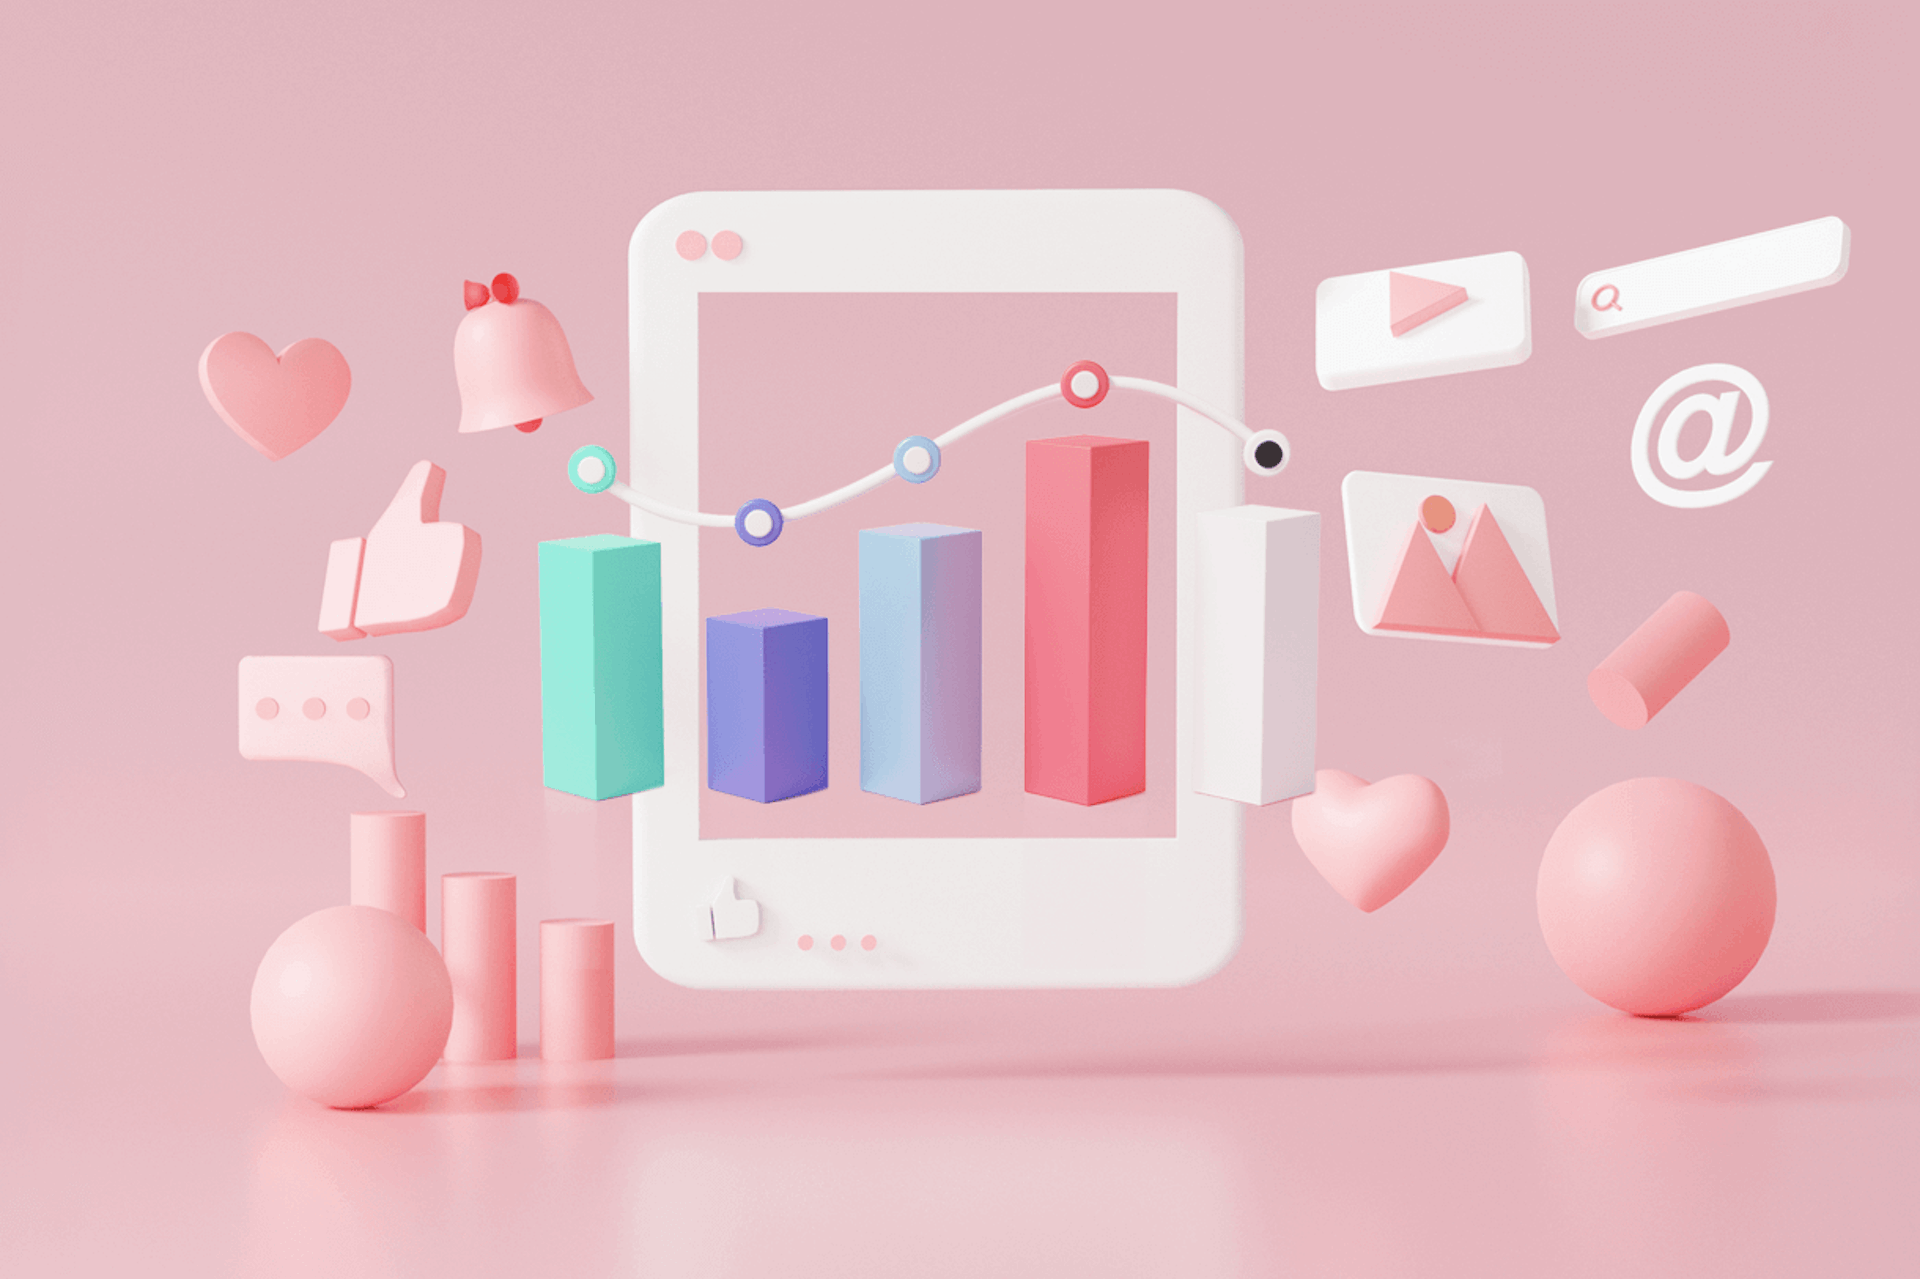 Image of social media symbols, icons, logos, and bar graph on a pale pink background. Social media statistics blog post